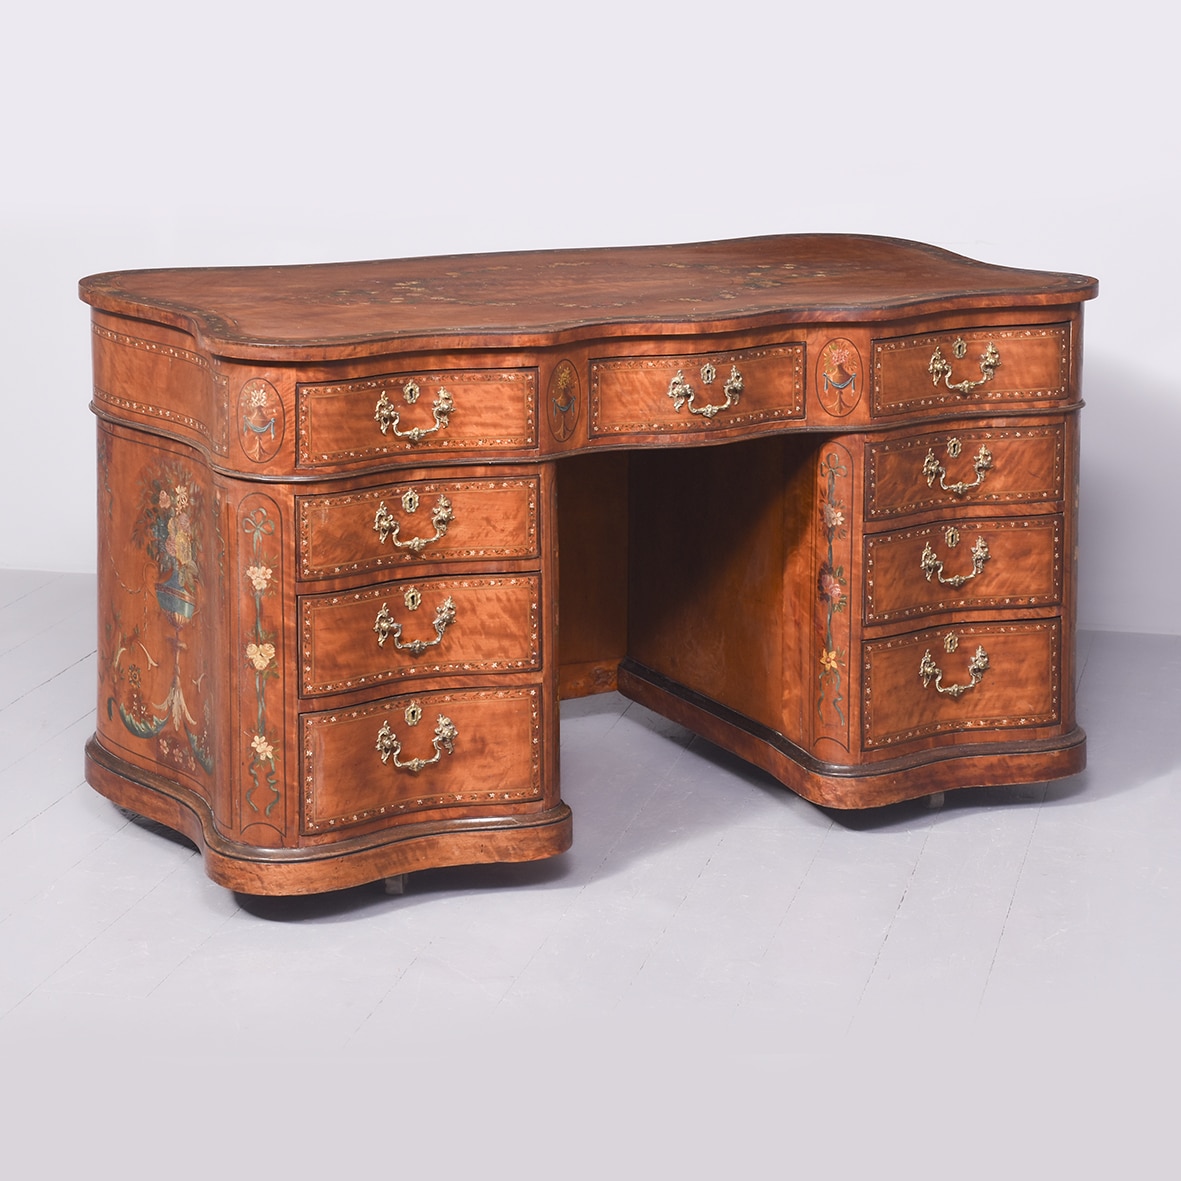 Rare Hand-Decorated Free-Standing 19th Century Satinwood Knee-Hole Desk Antique desk Antique Desks